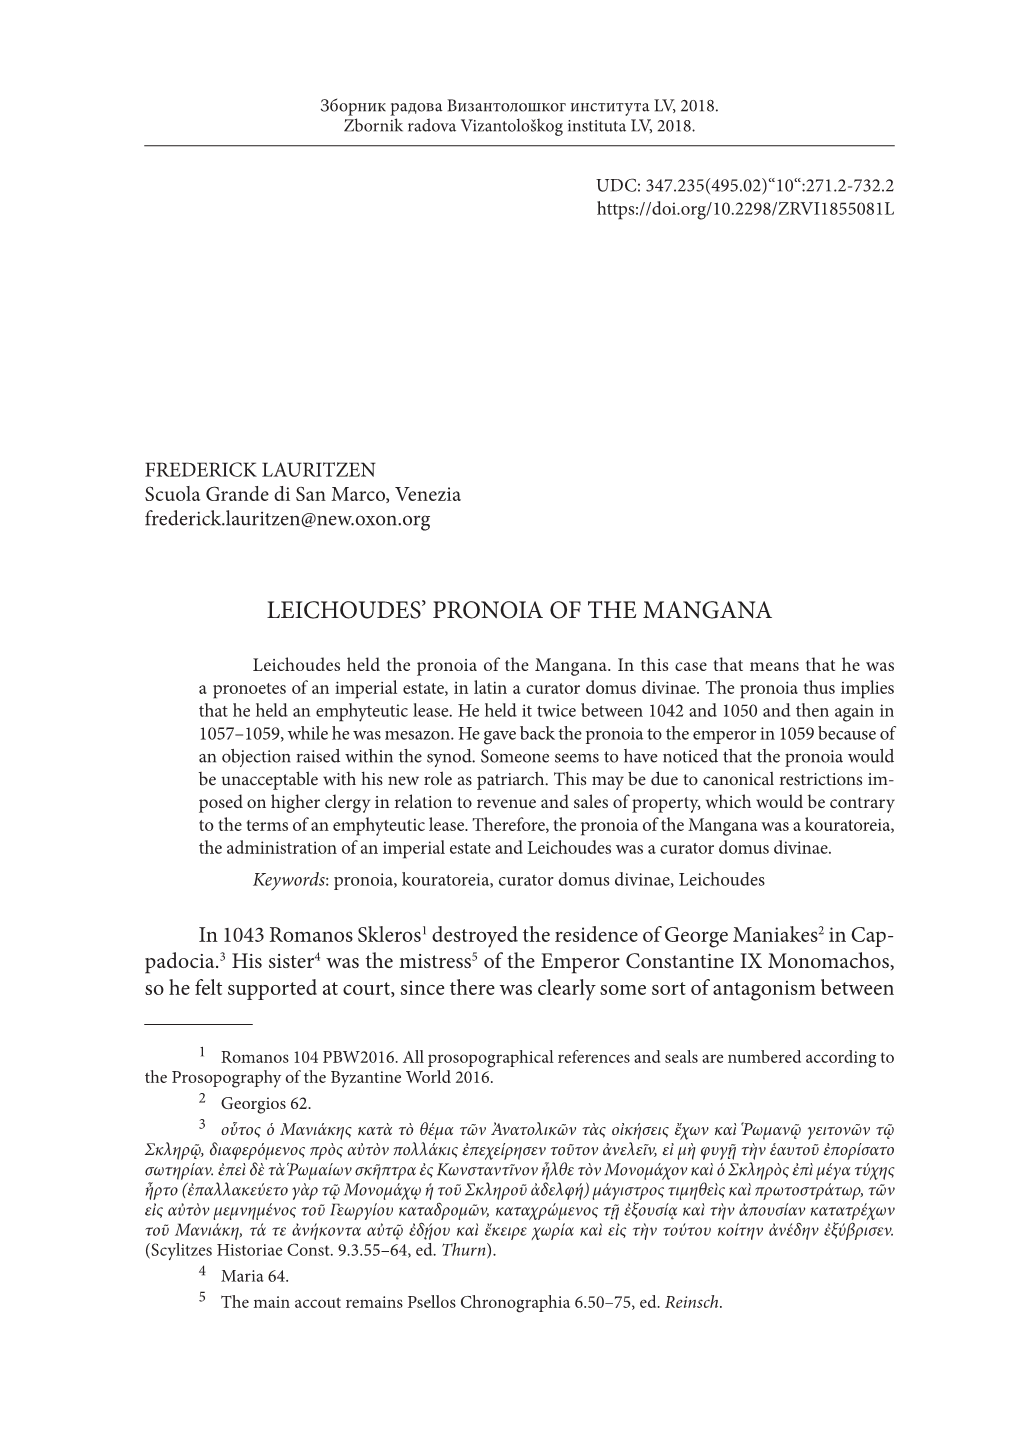 Leichoudes' Pronoia of the Mangana